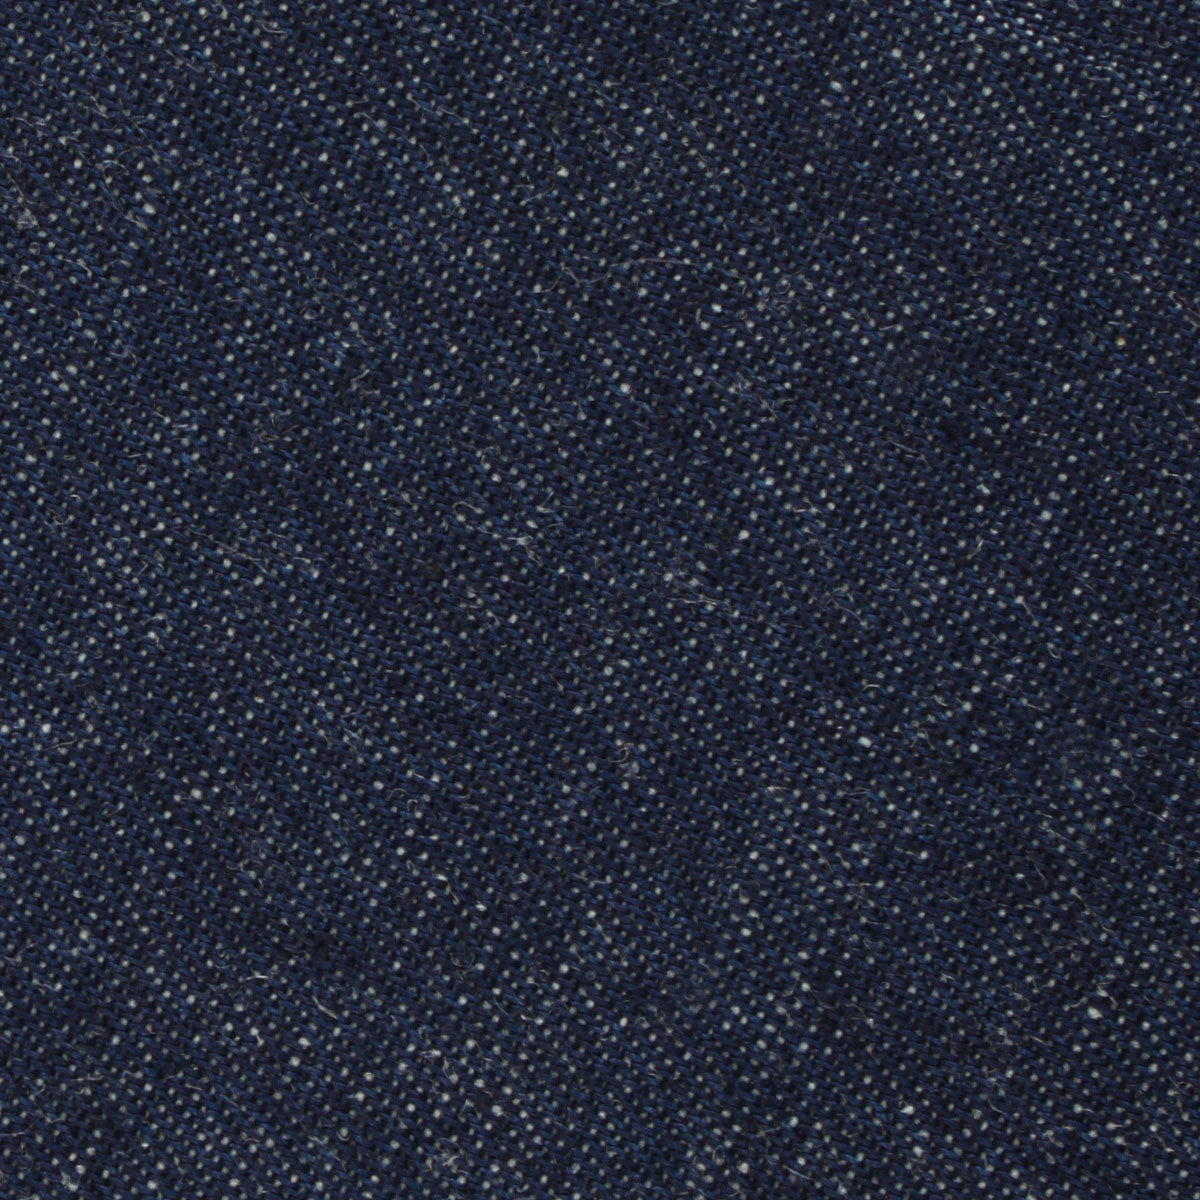 Dark Blue Raw Denim Linen Fabric Pocket Square